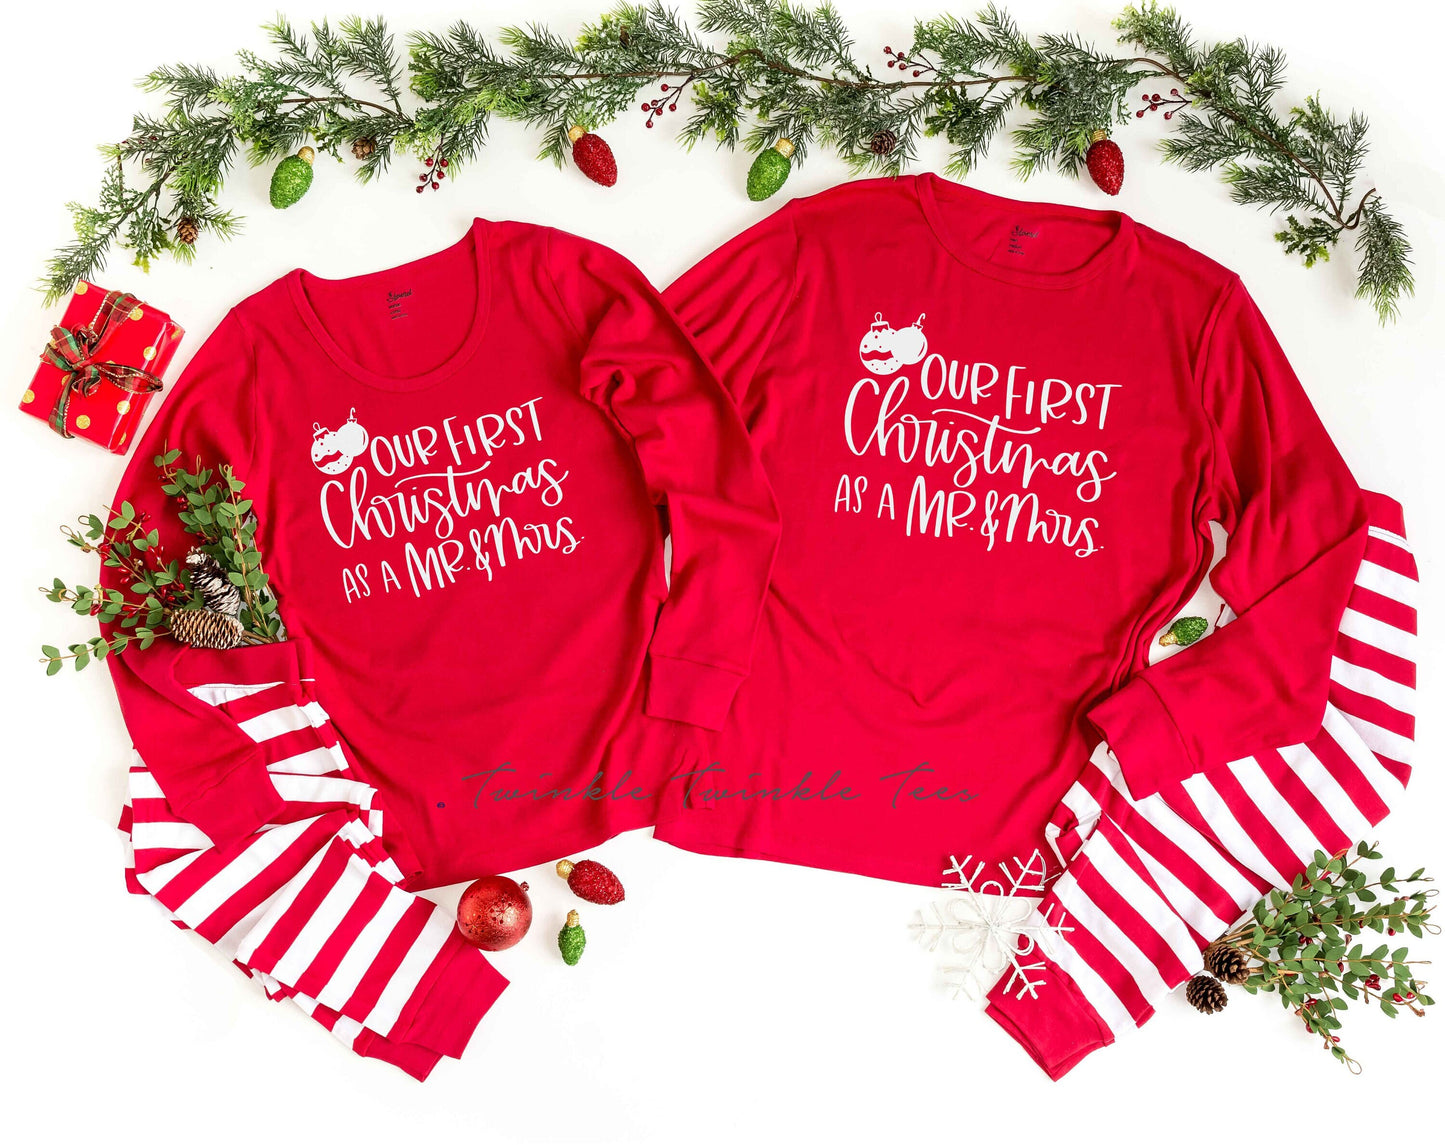 Our First Christmas as a Mr and Mrs Red Striped Christmas Pajamas - matching christmas pjs - newlyweds christmas pajamas